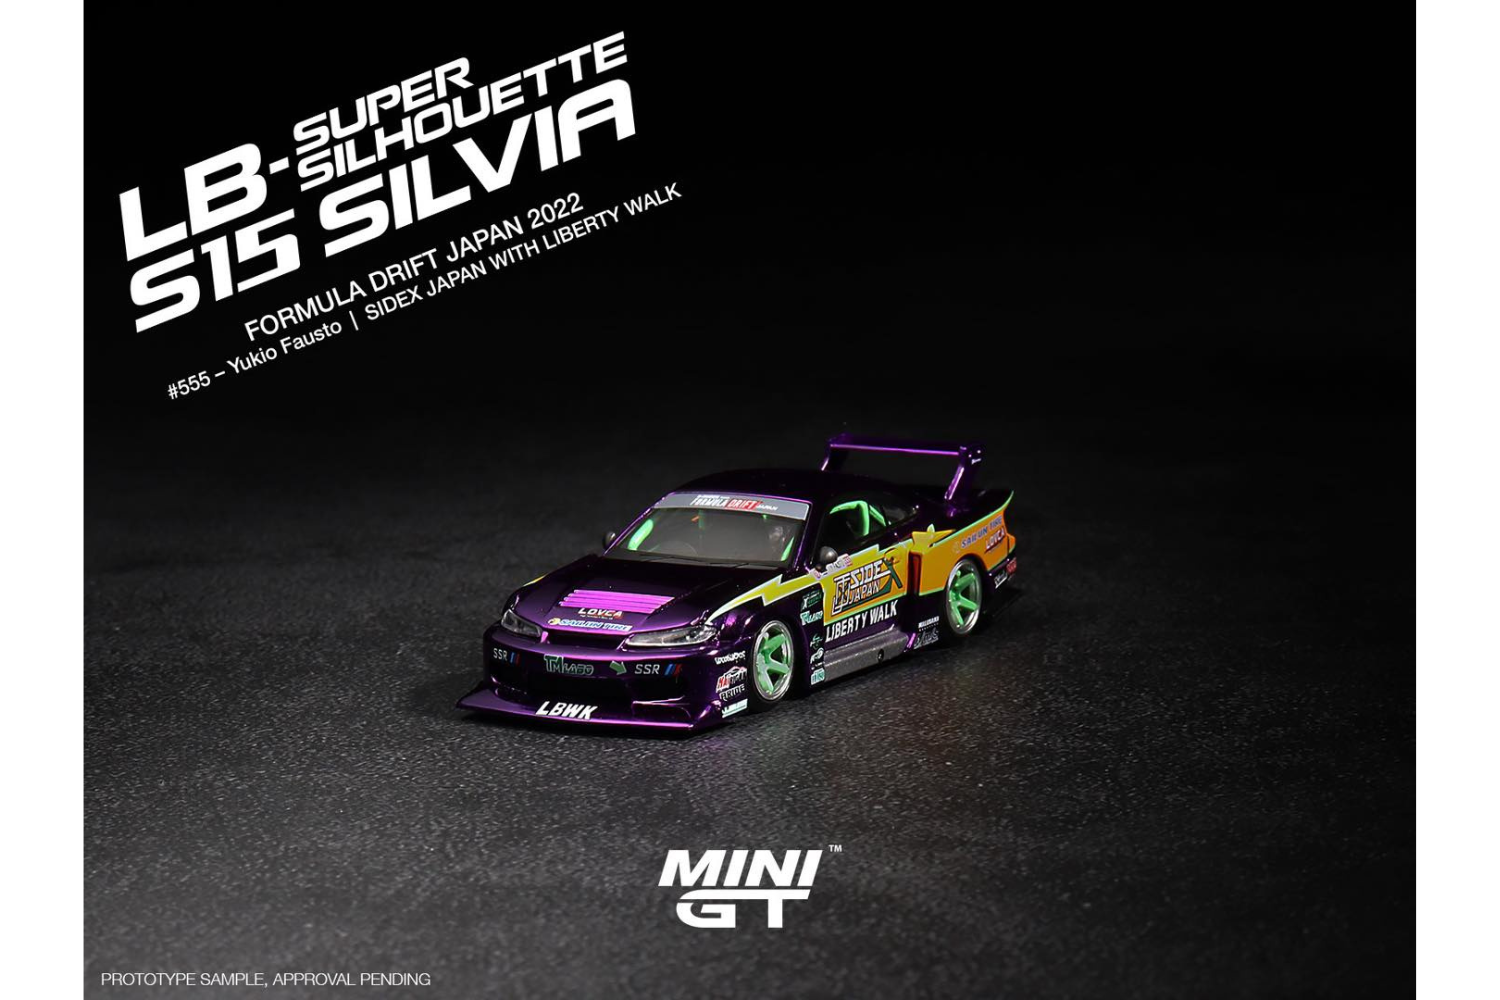 Mini GT LB-Super Silhouette Nissan Silvia S15 Formula Drift Japan 2022 #555  Yukio Fausto